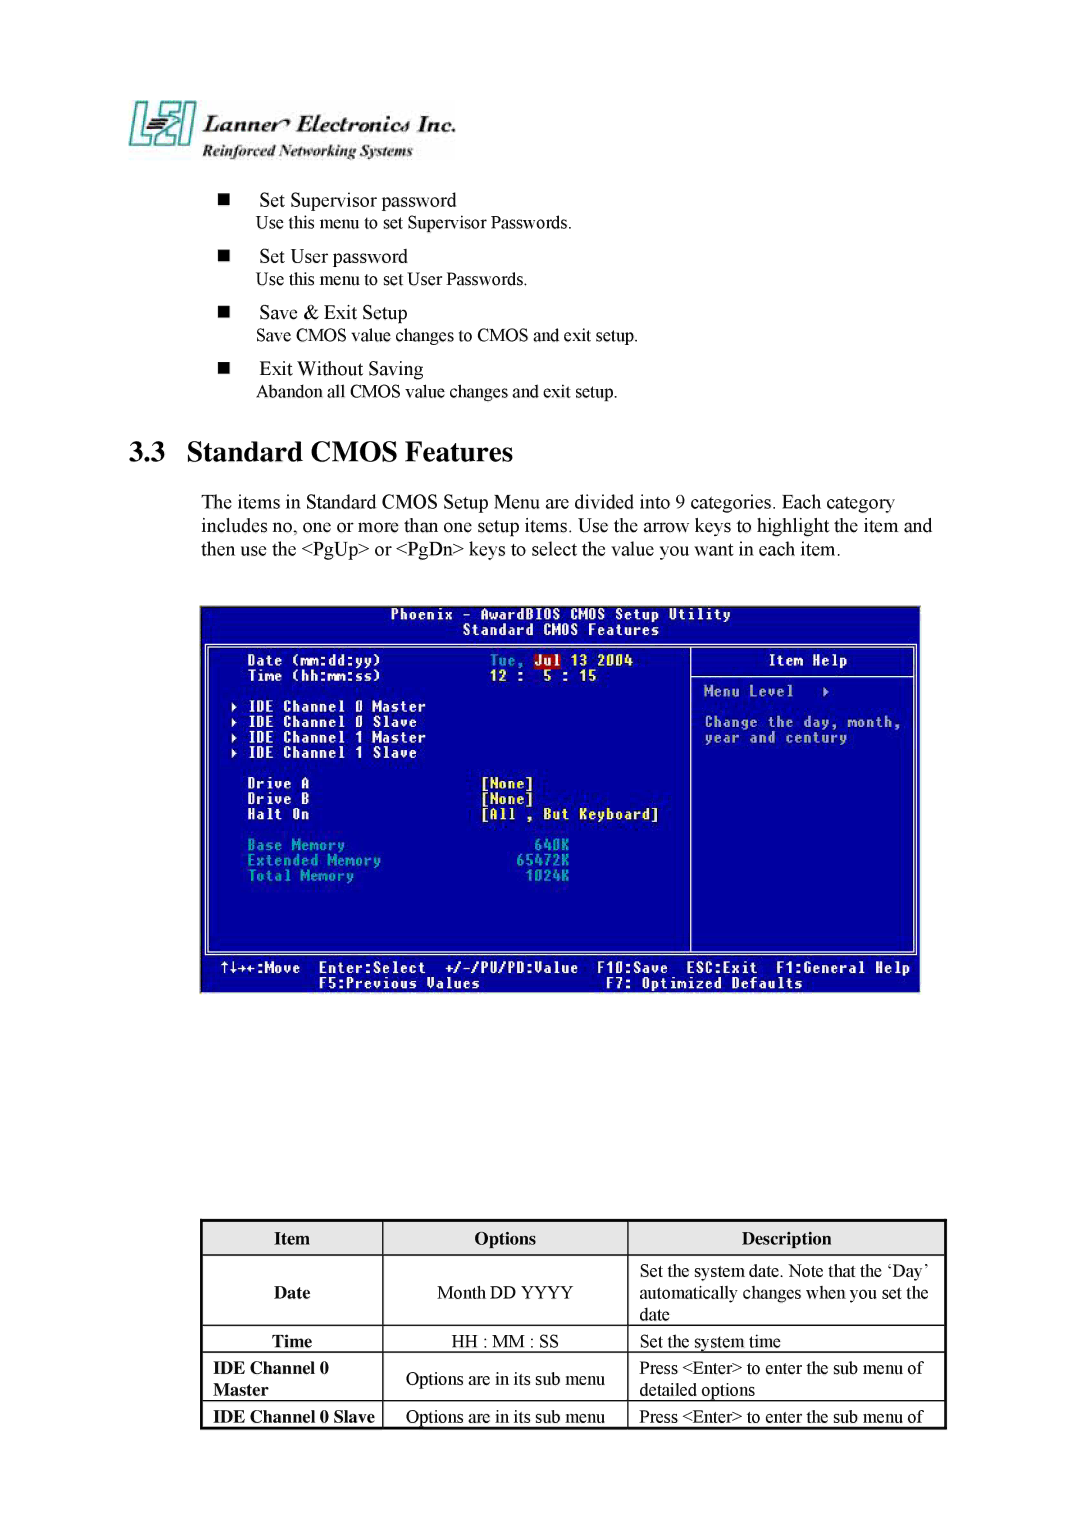 Lanner electronic FW-7870 user manual Standard Cmos Features, Options Description Date 